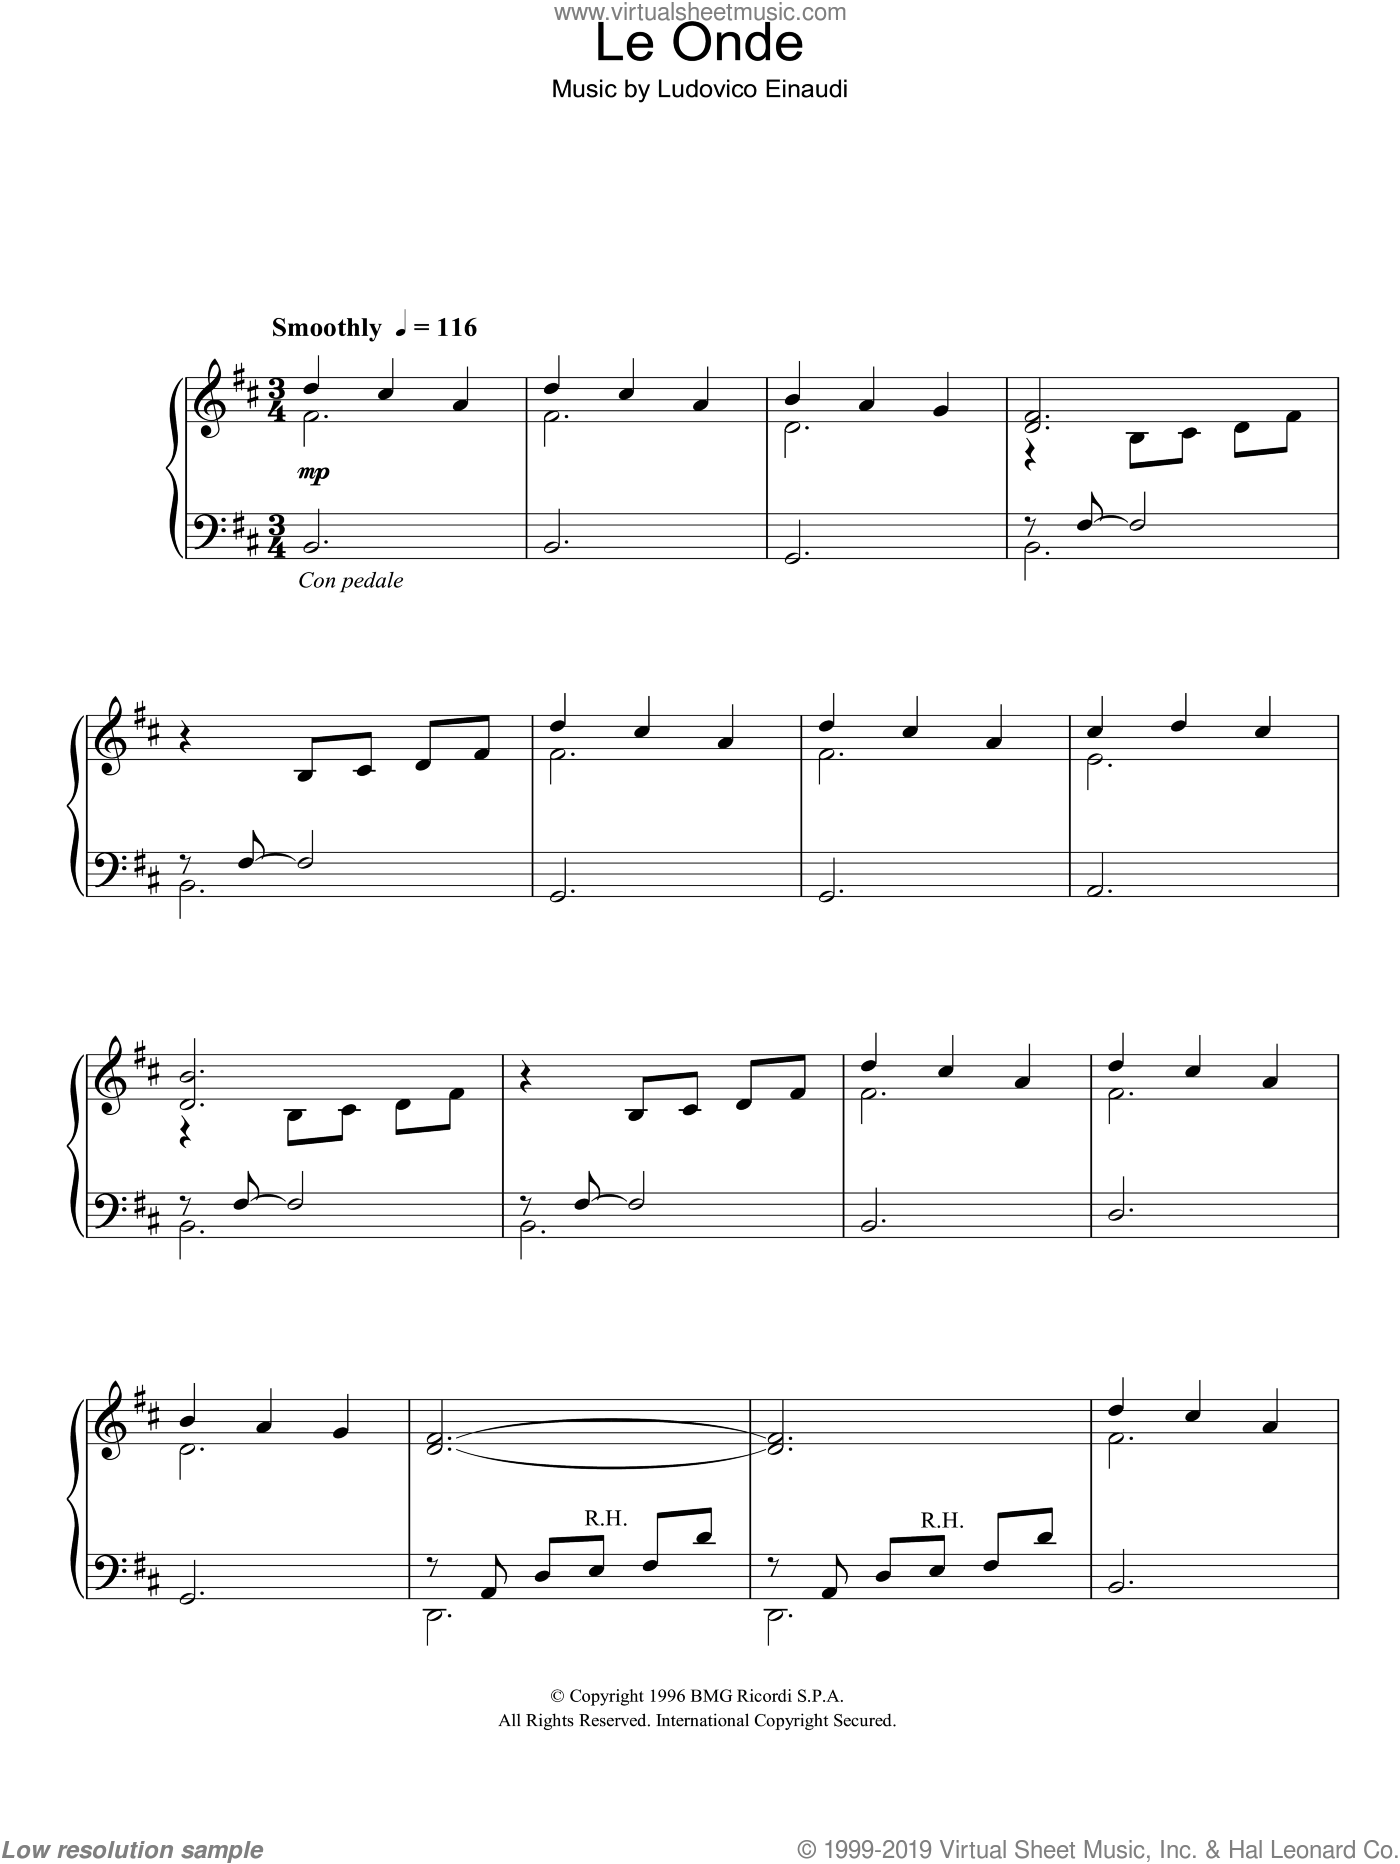 amelie piano score pdf download